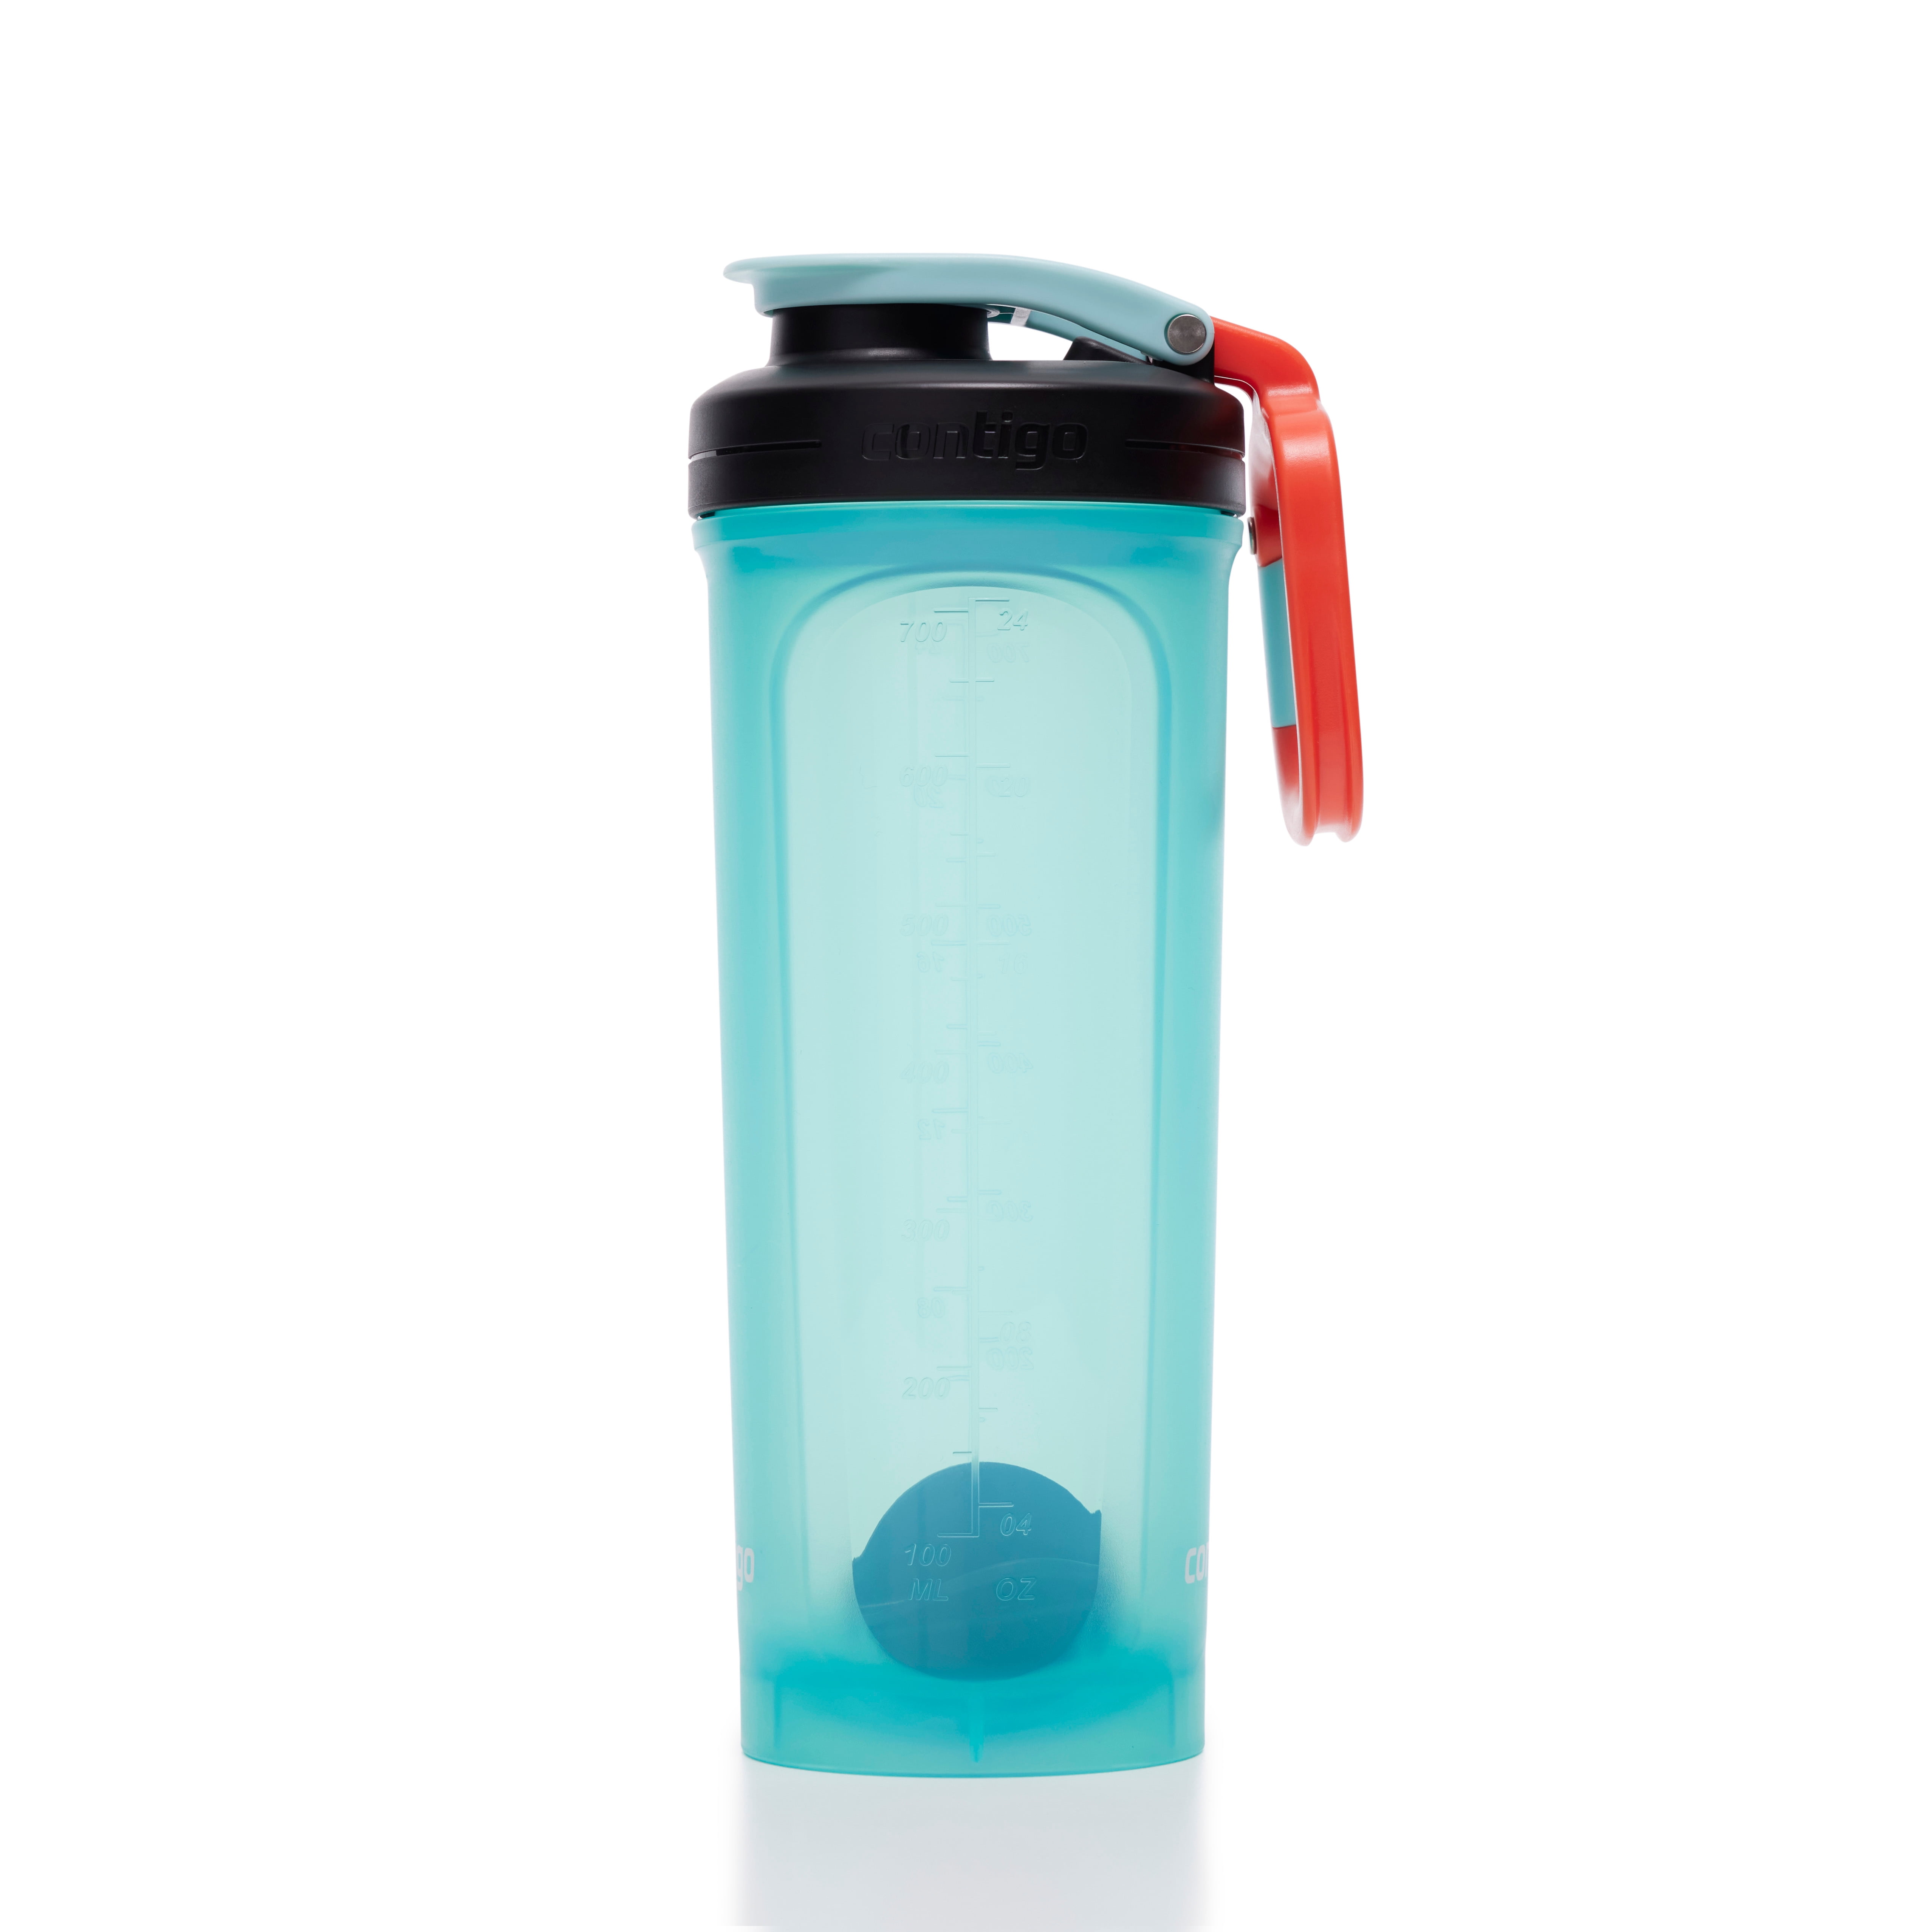 Contigo Fit Shake & Go 2.0 Shaker Bottle, in Blue, 28 fl oz.